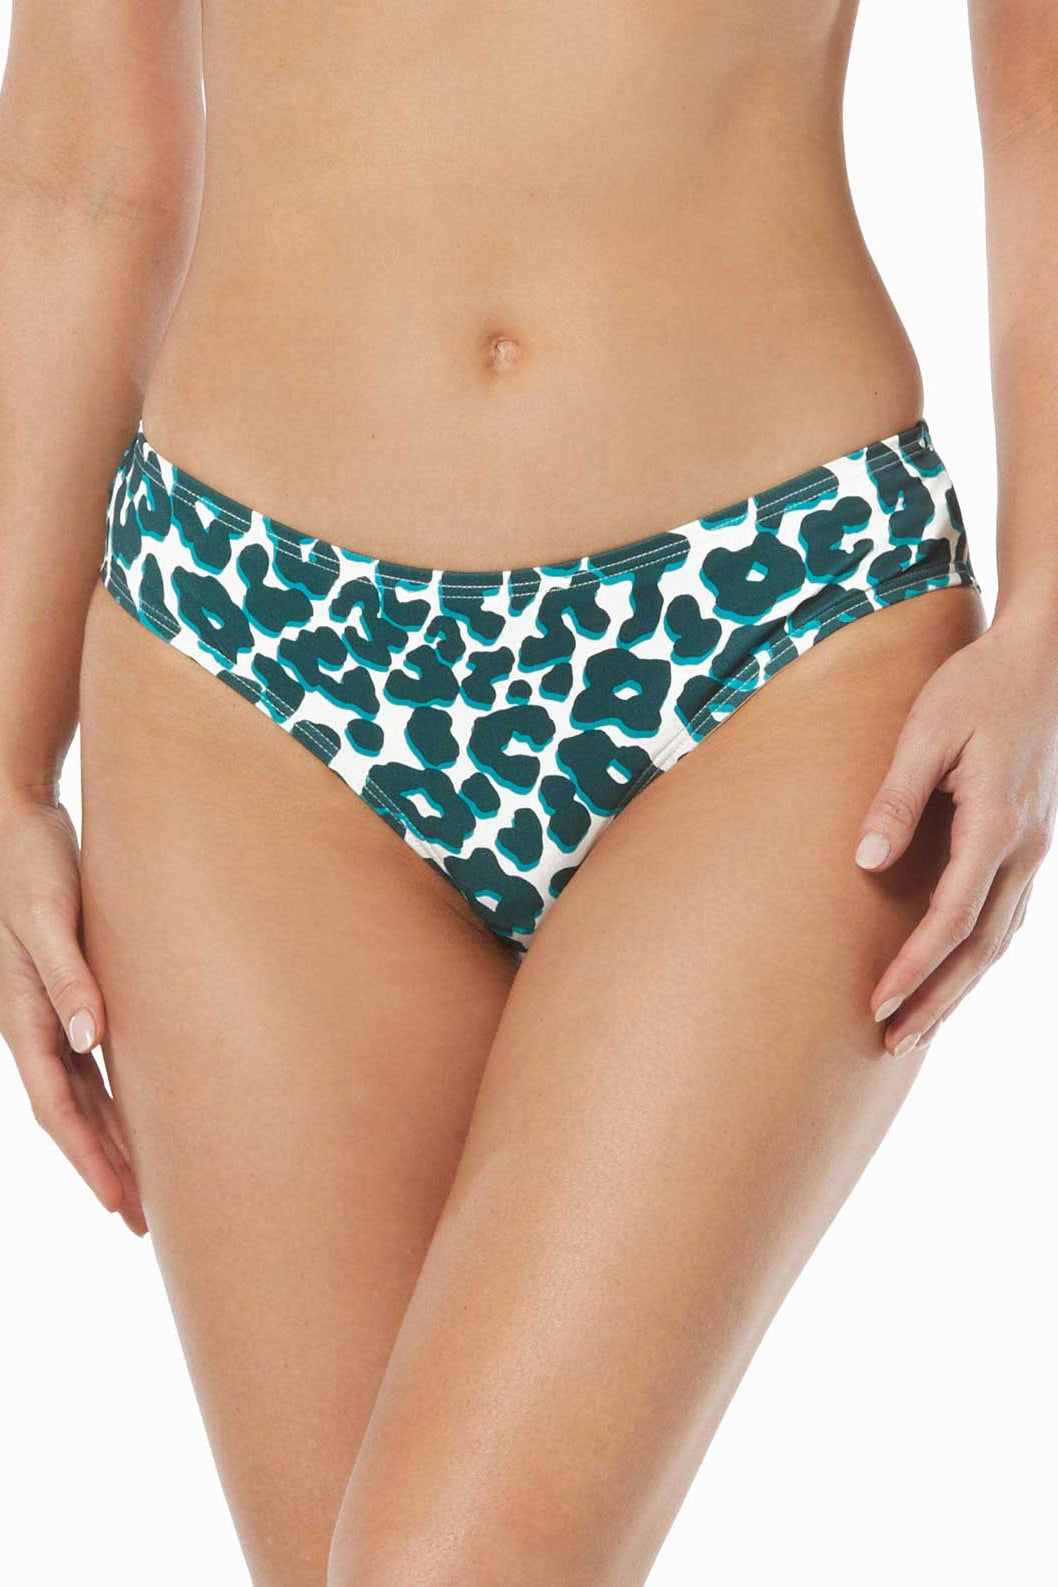 Vince Camuto: Seaside Leopard Cheeky Bikini Bottom